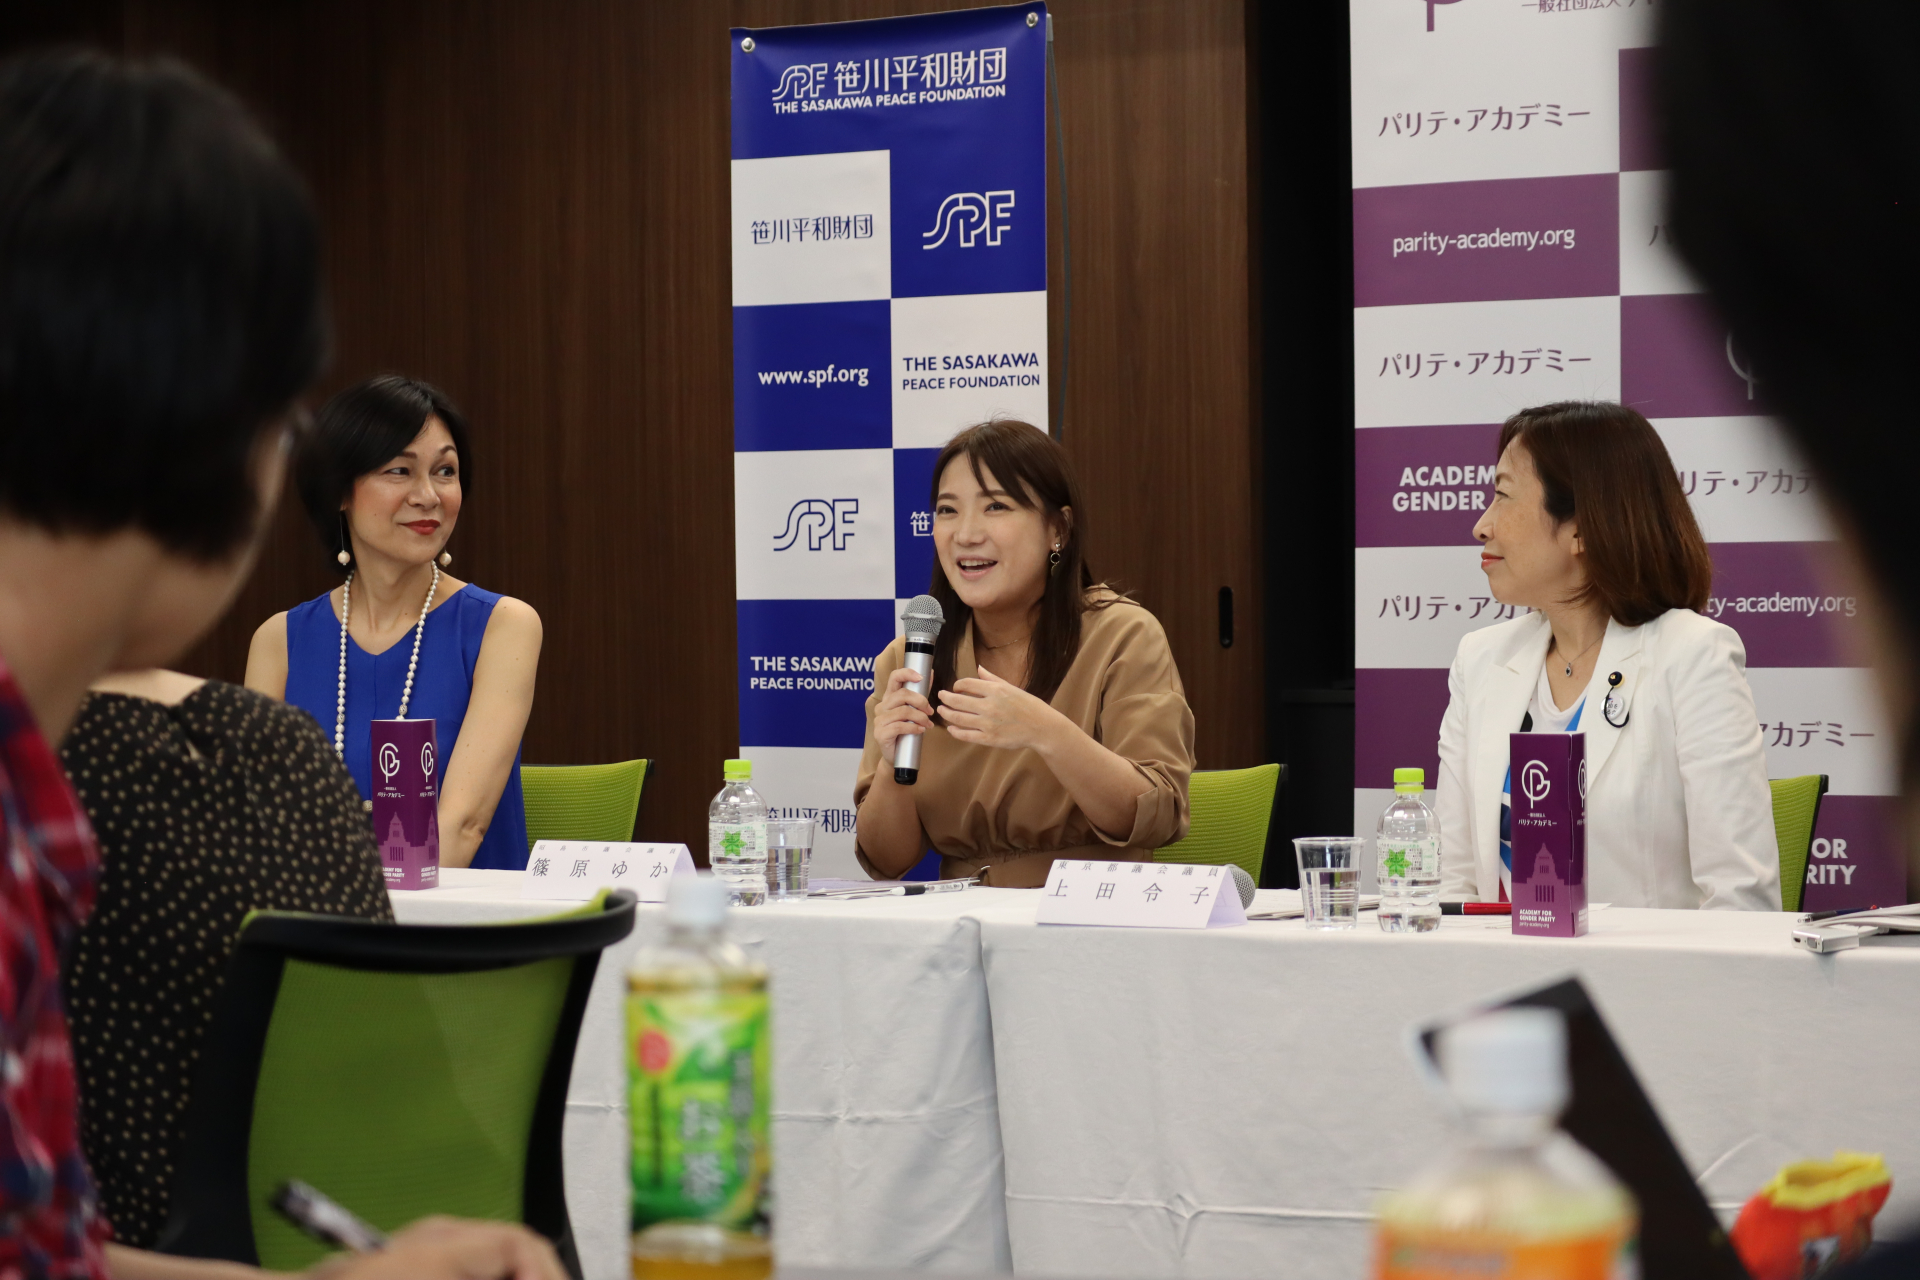 From left to right: Assembly member for Shinjuku Ward Karen Yoda, Akishima City Councilmember Yuka Shinohara, and Tokyo Metropolitan Assembly member Reiko Ueda